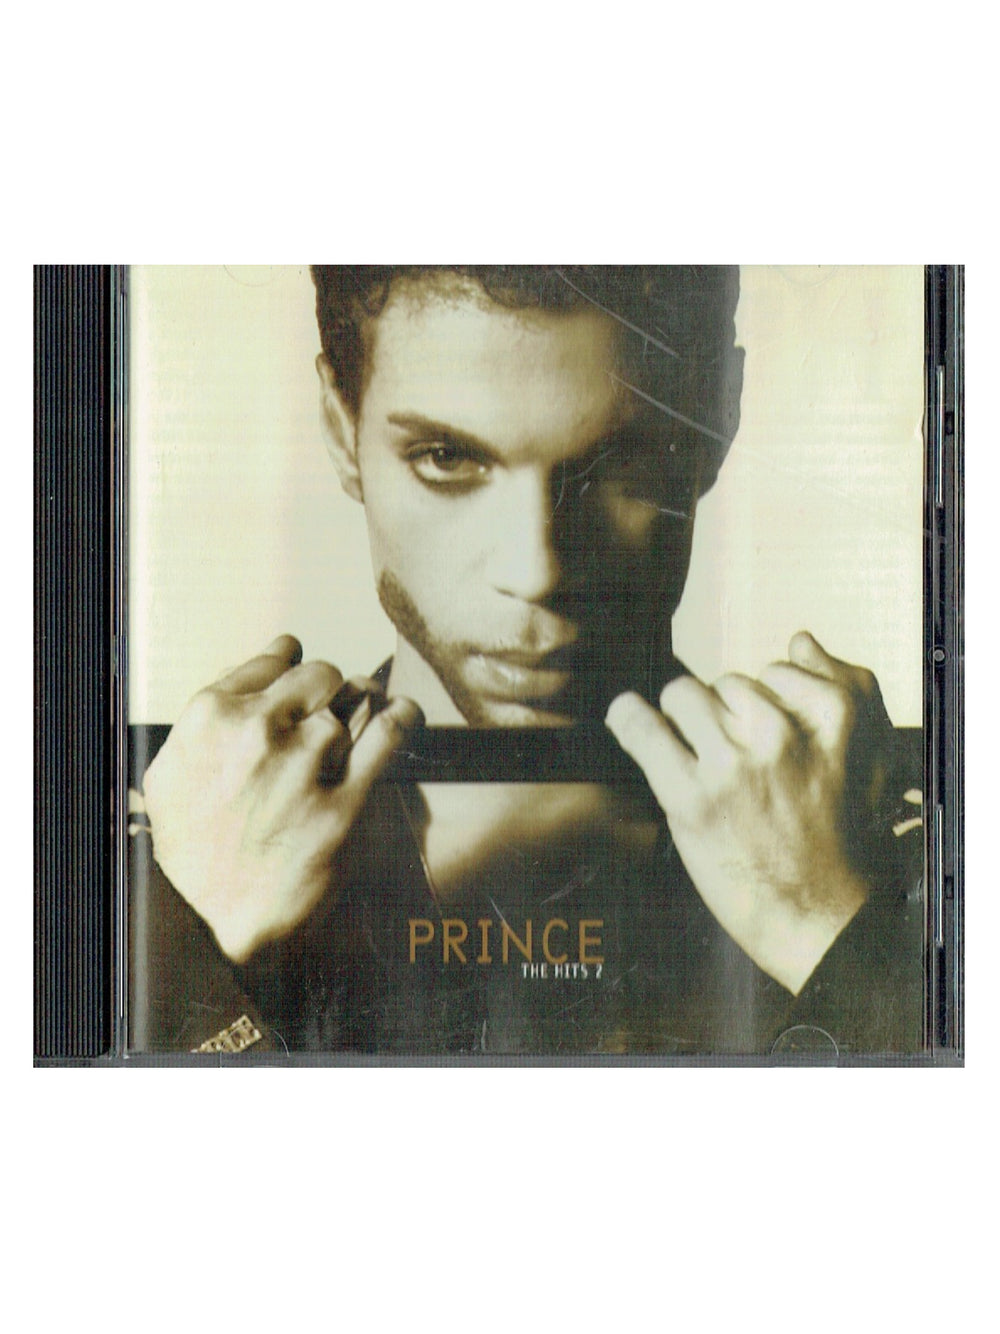 Prince –  The Hits 2 CD Album 1993 Original Release 18 Tracks WE833